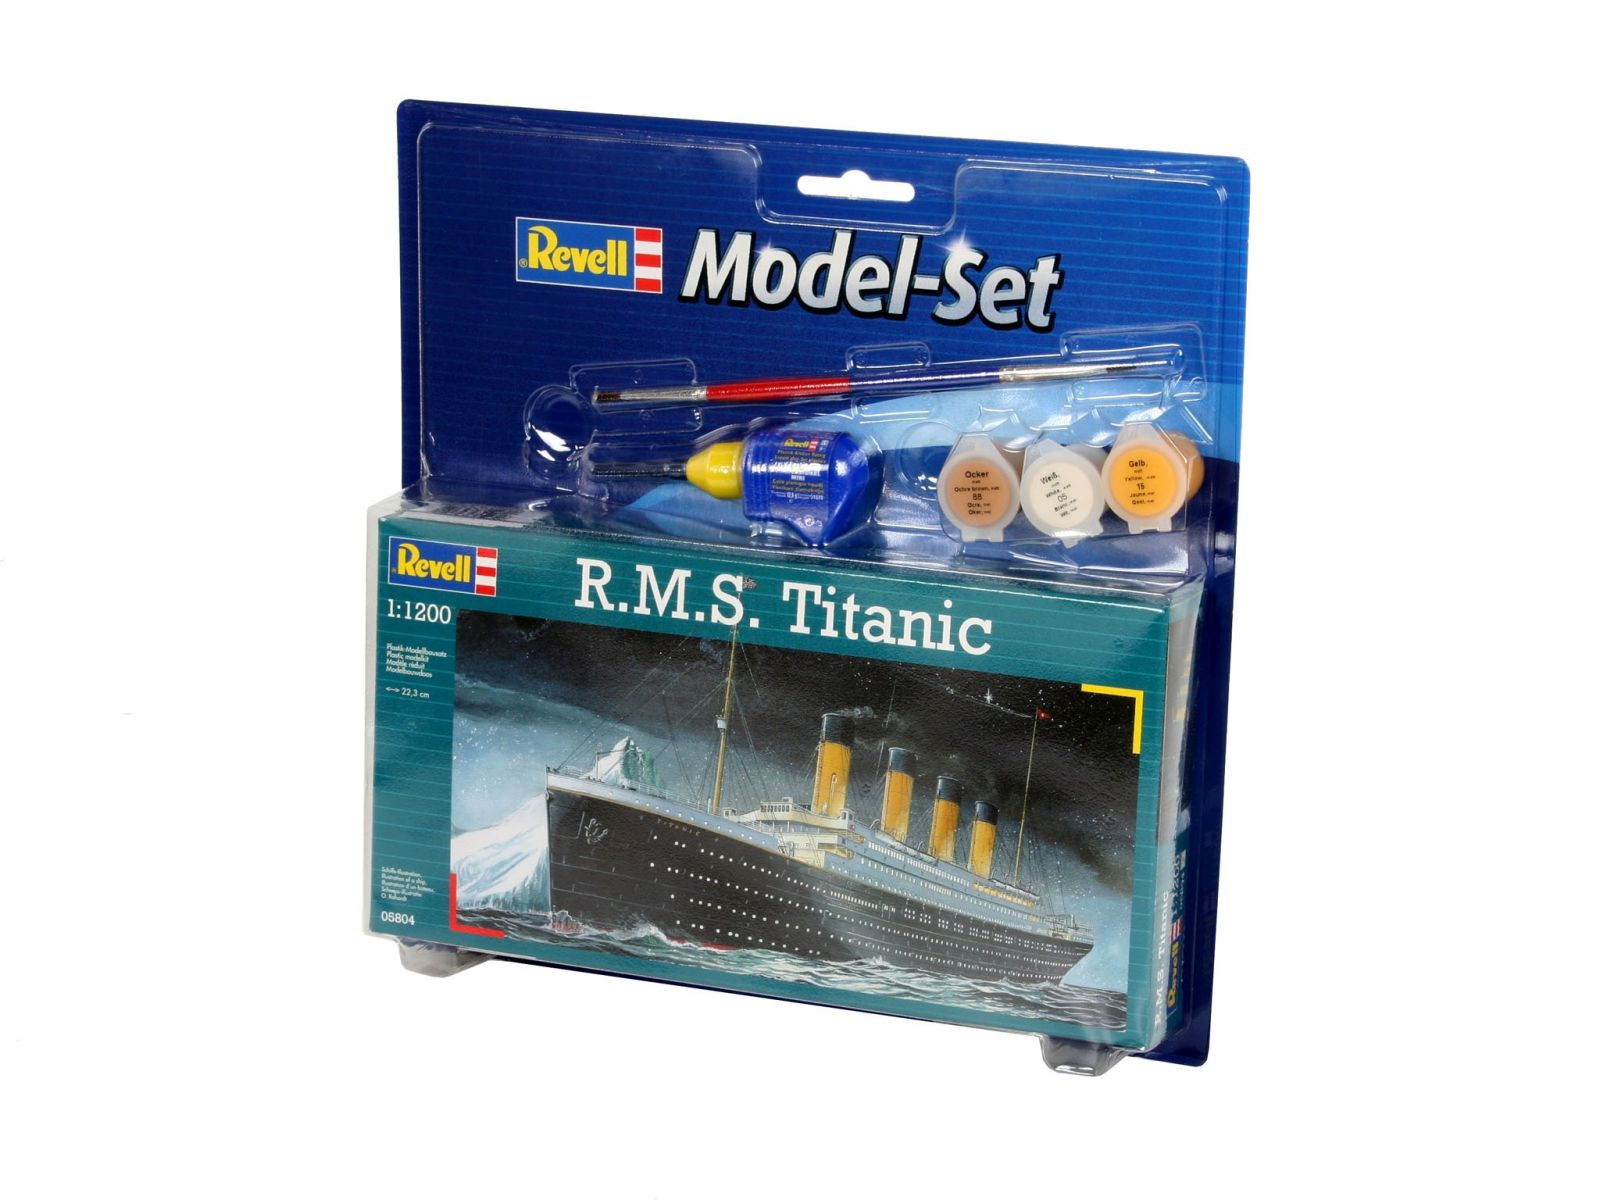 Revell 65804 - Model Set R.M.S. Titanic